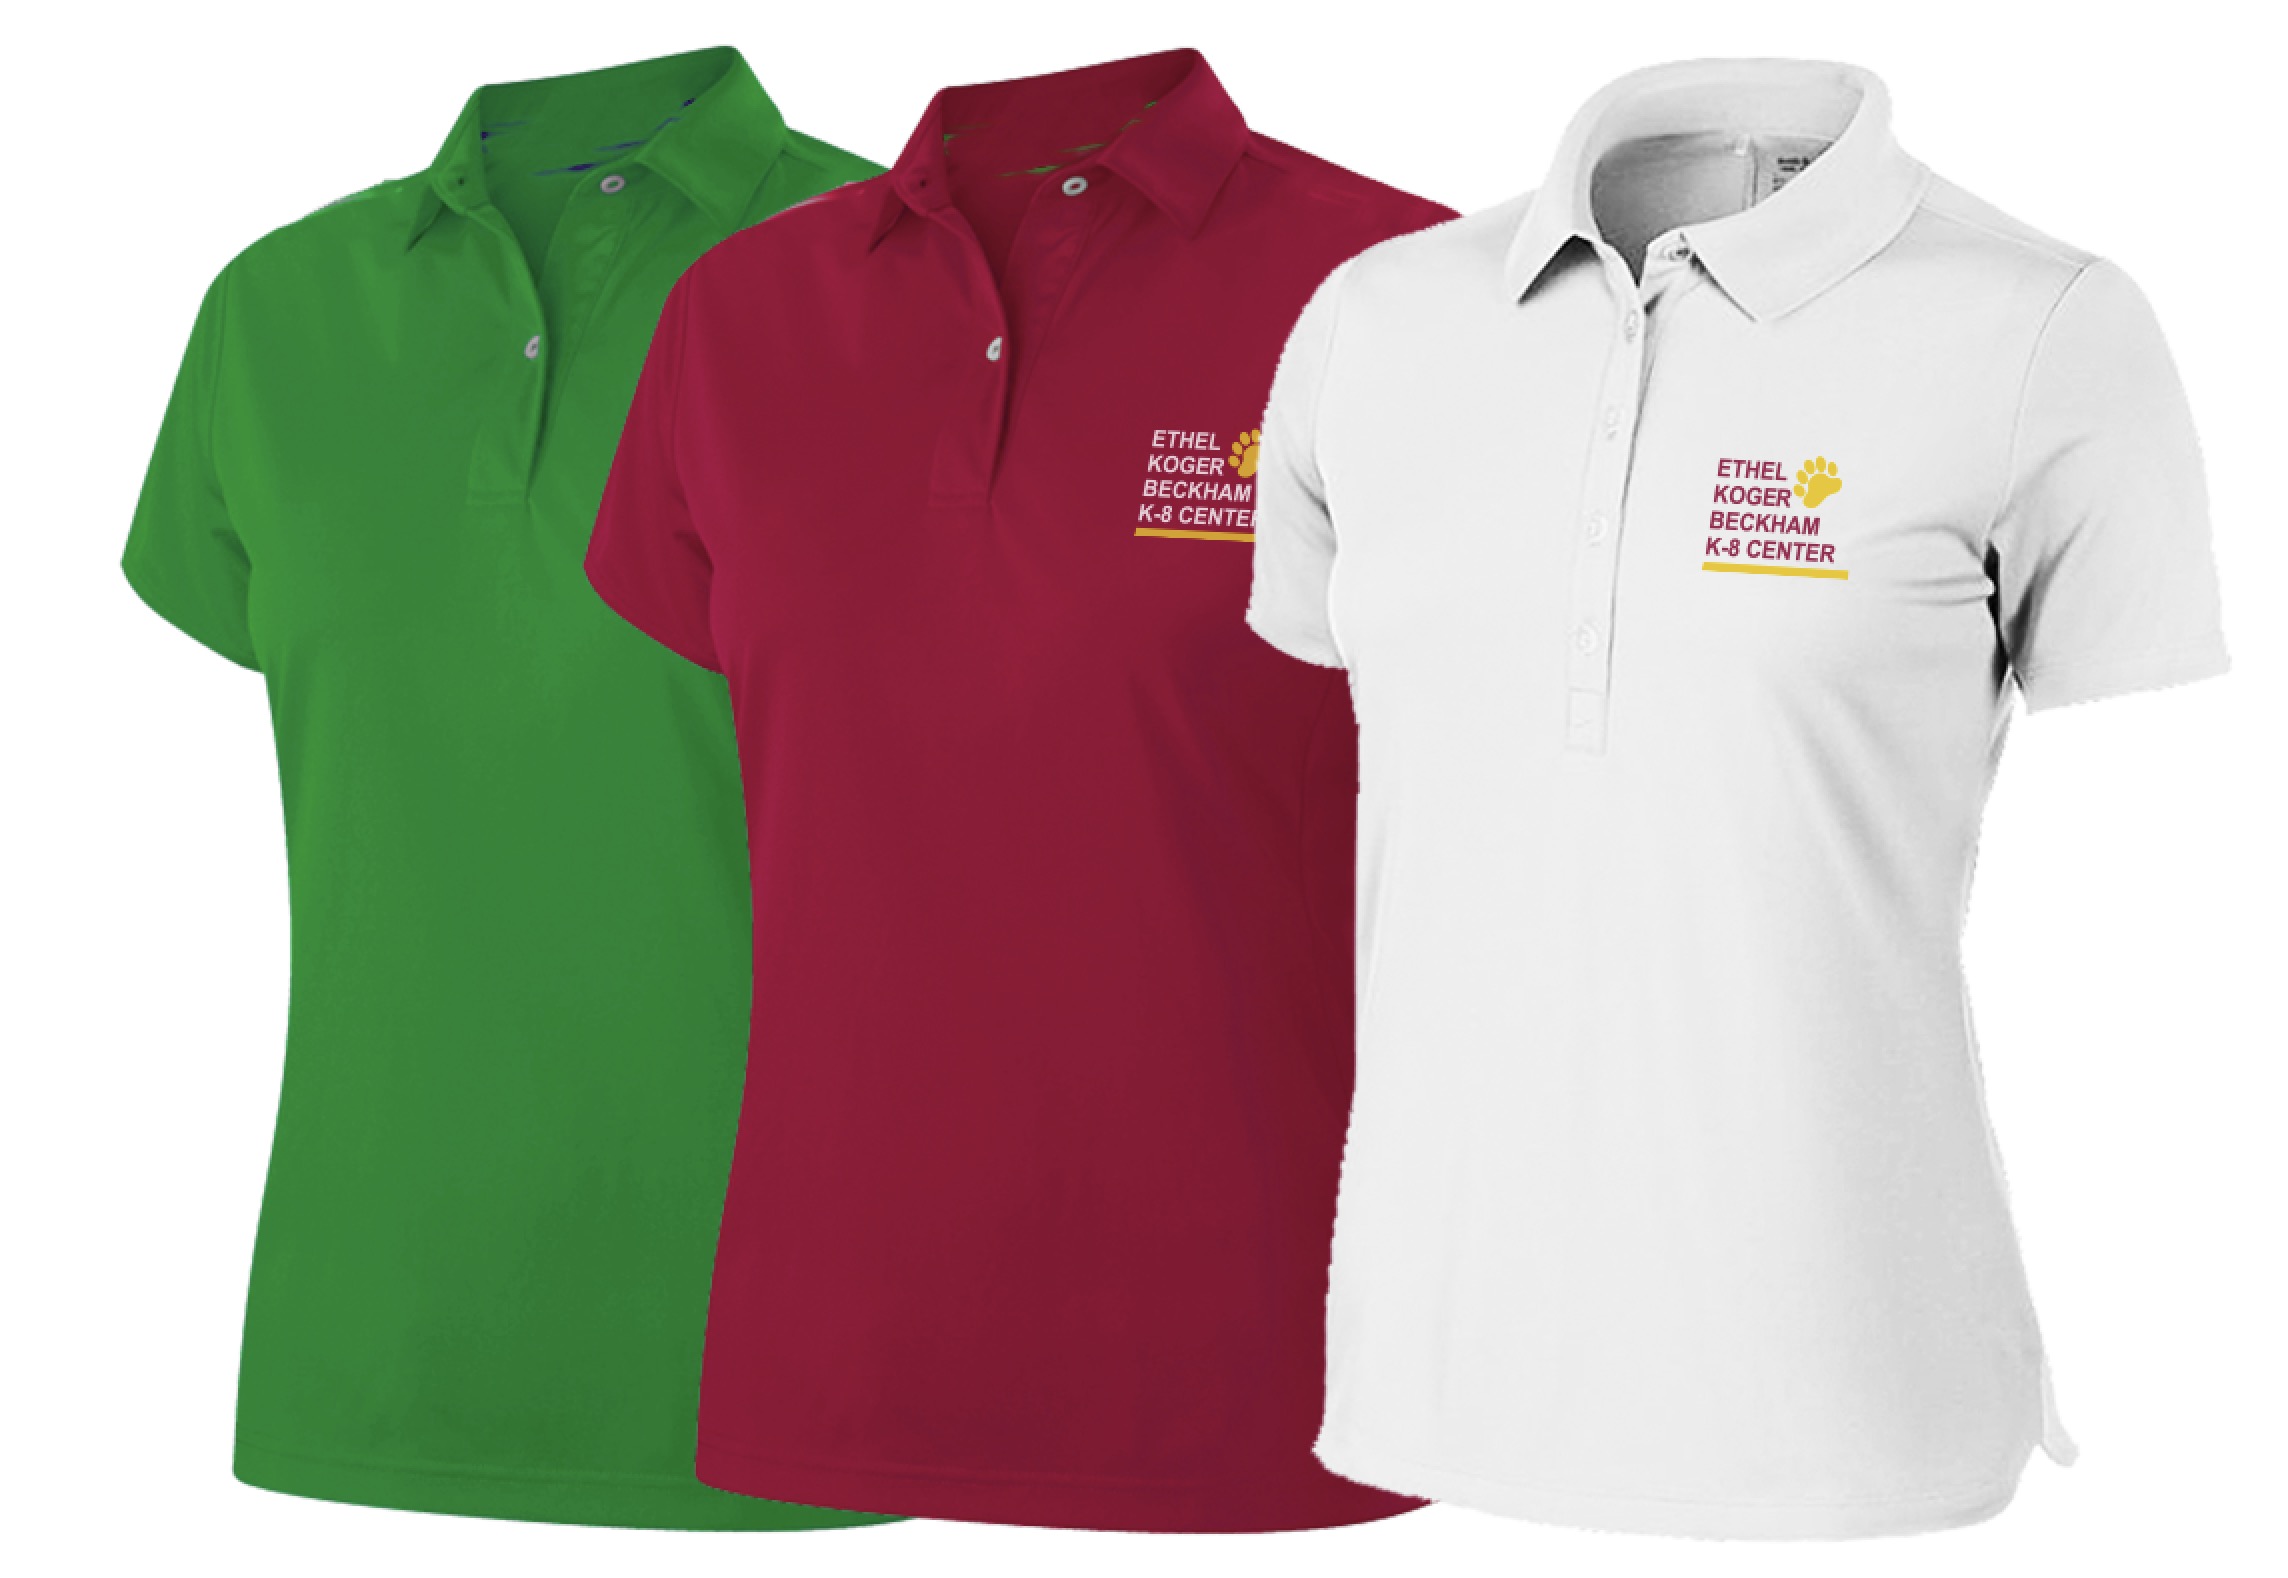 Ibiley Uniforms & More - #1 Online Retailer for Boys & Girls School ...